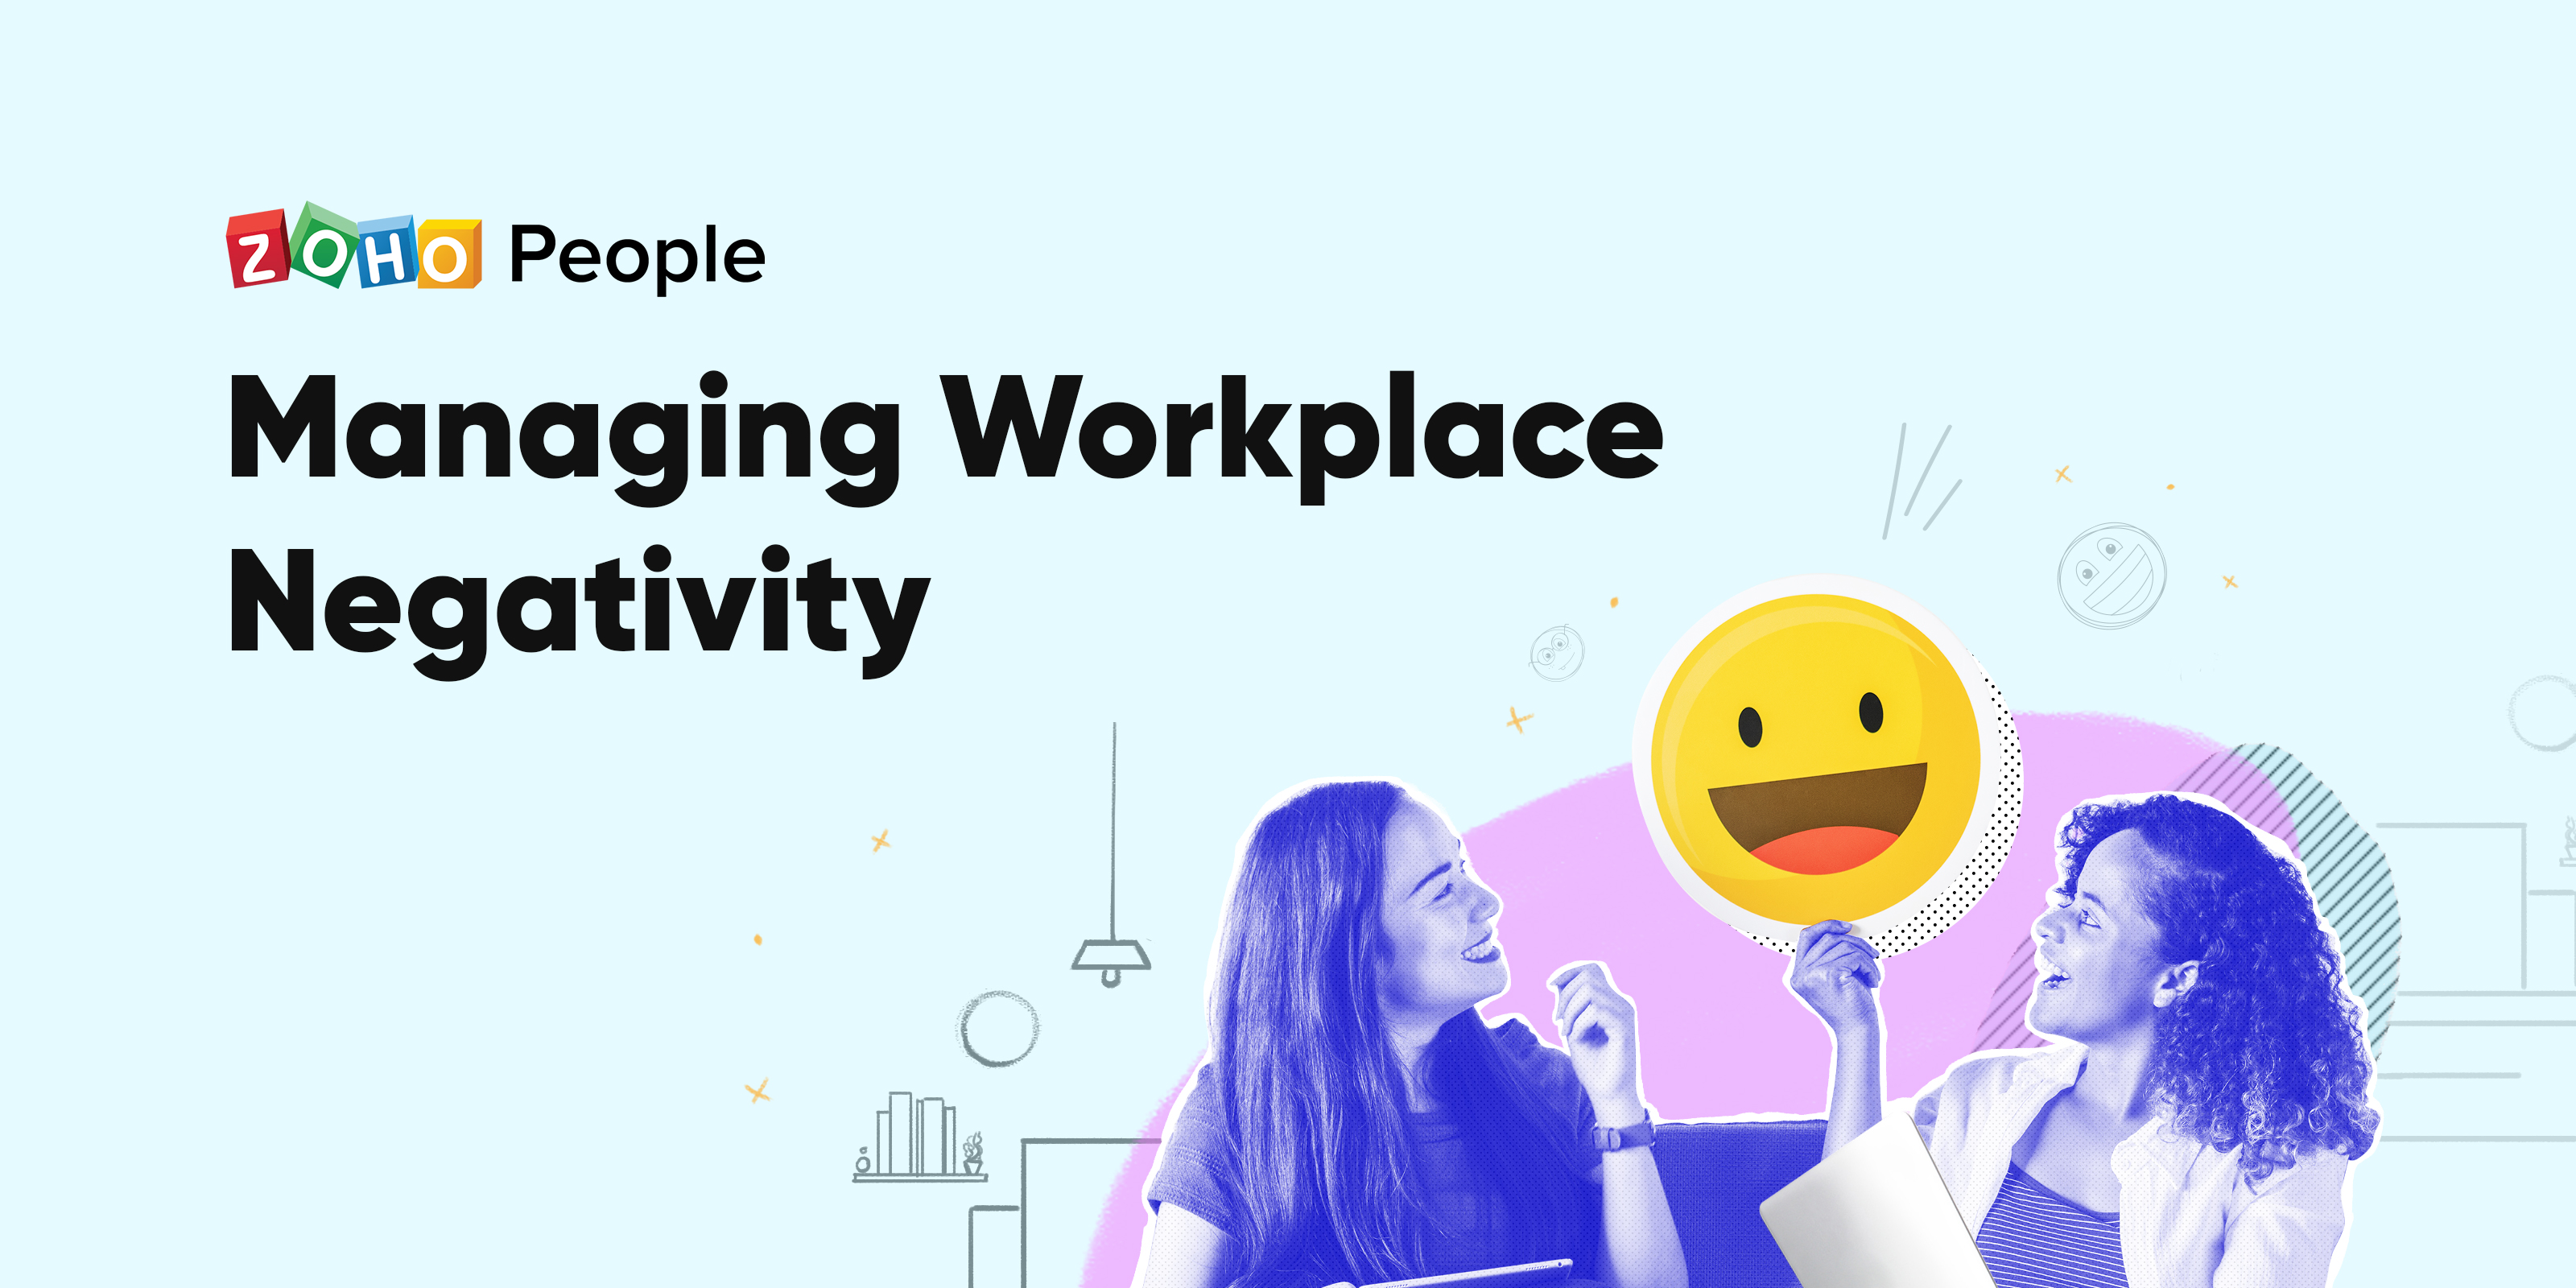 10 ways to minimize workplace negativity